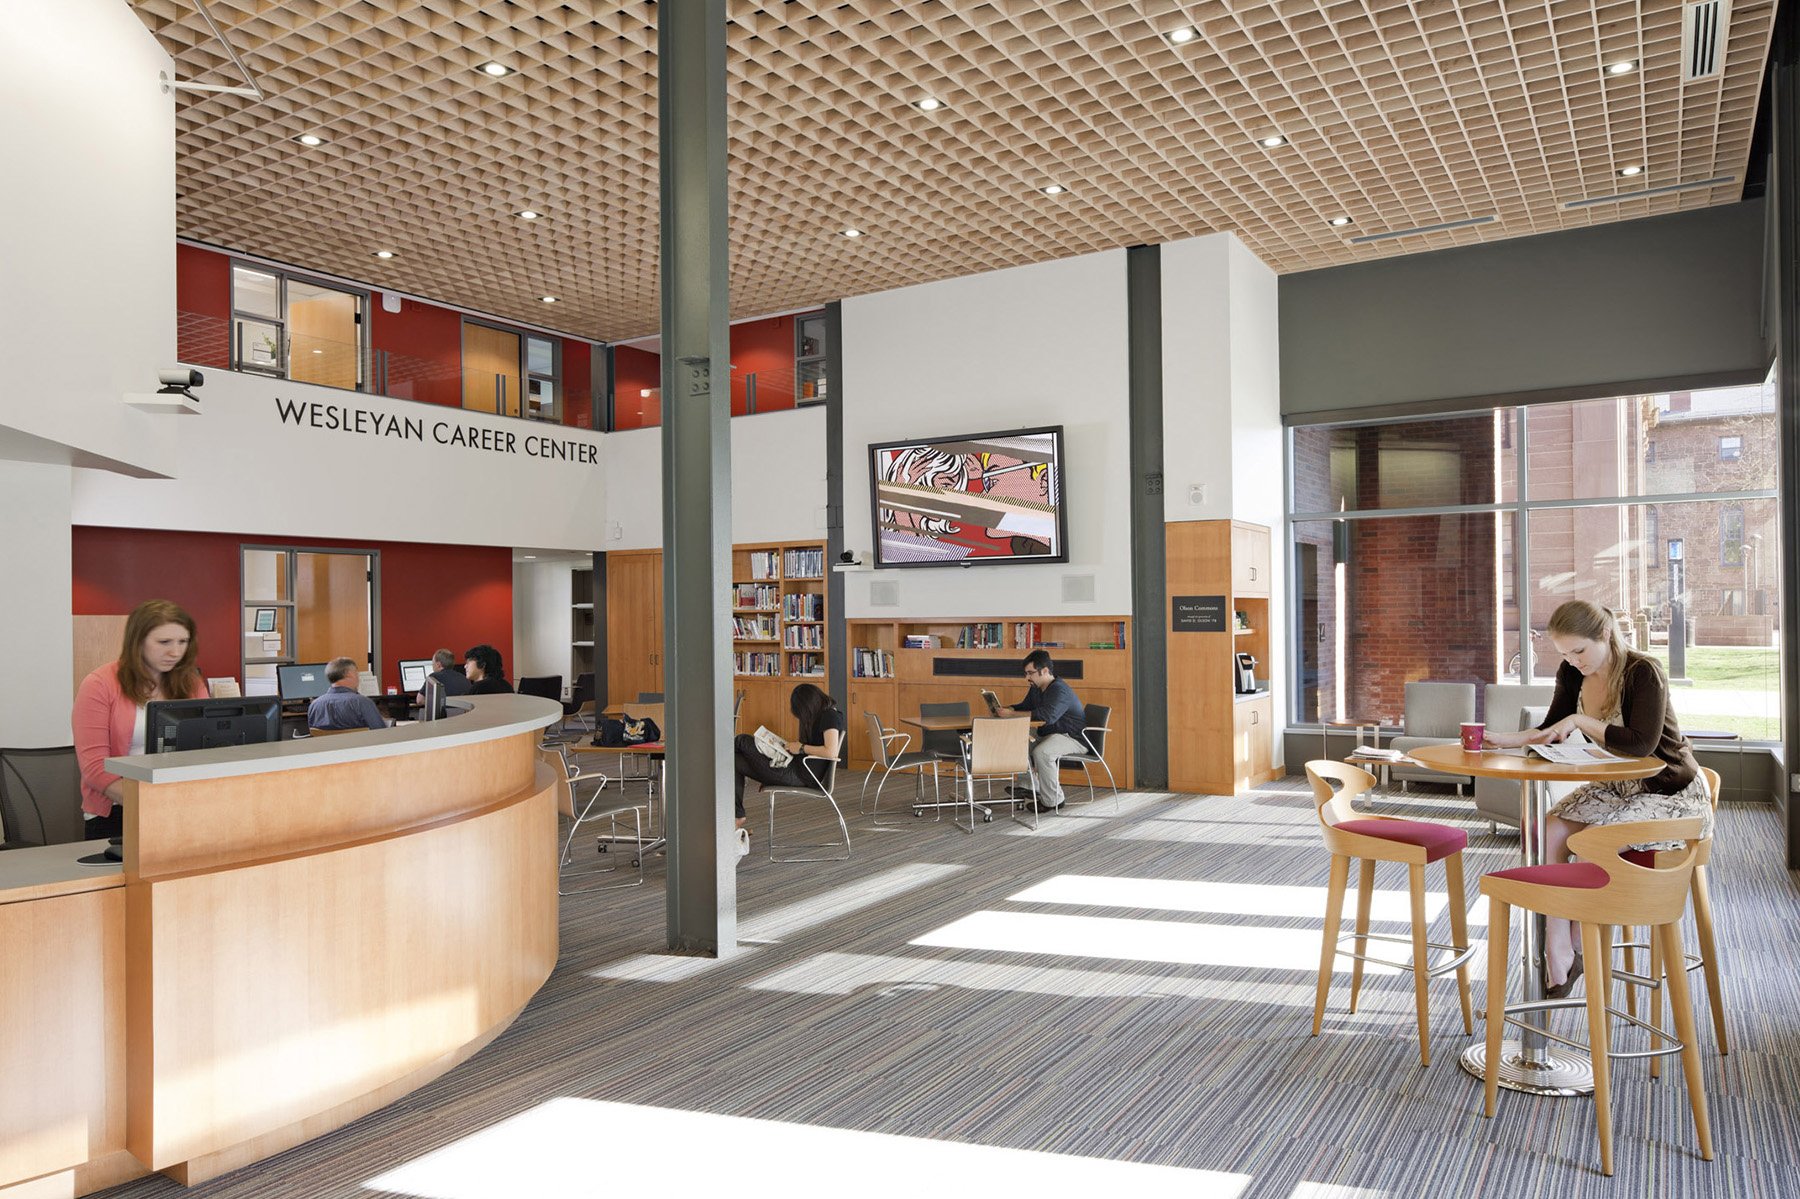 Wesleyan University / Art History Department & Career Center - Newman Architects